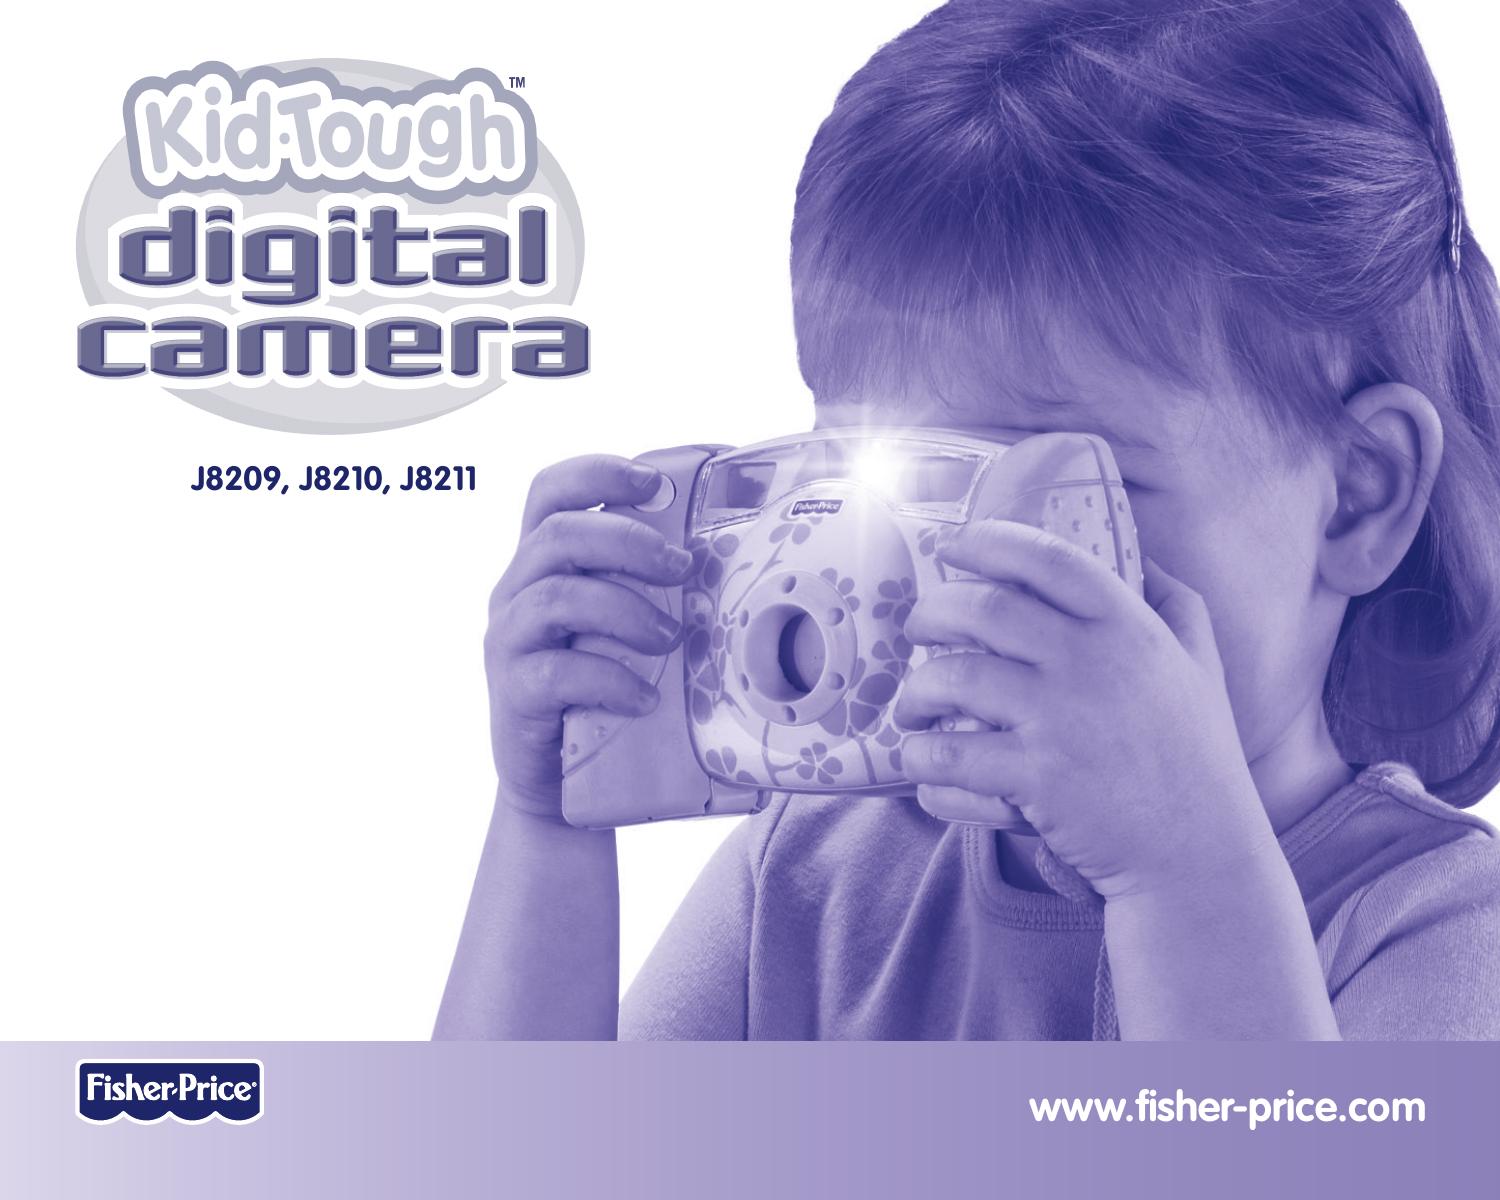 Fisher-Price J8210 Digital Camera User Manual